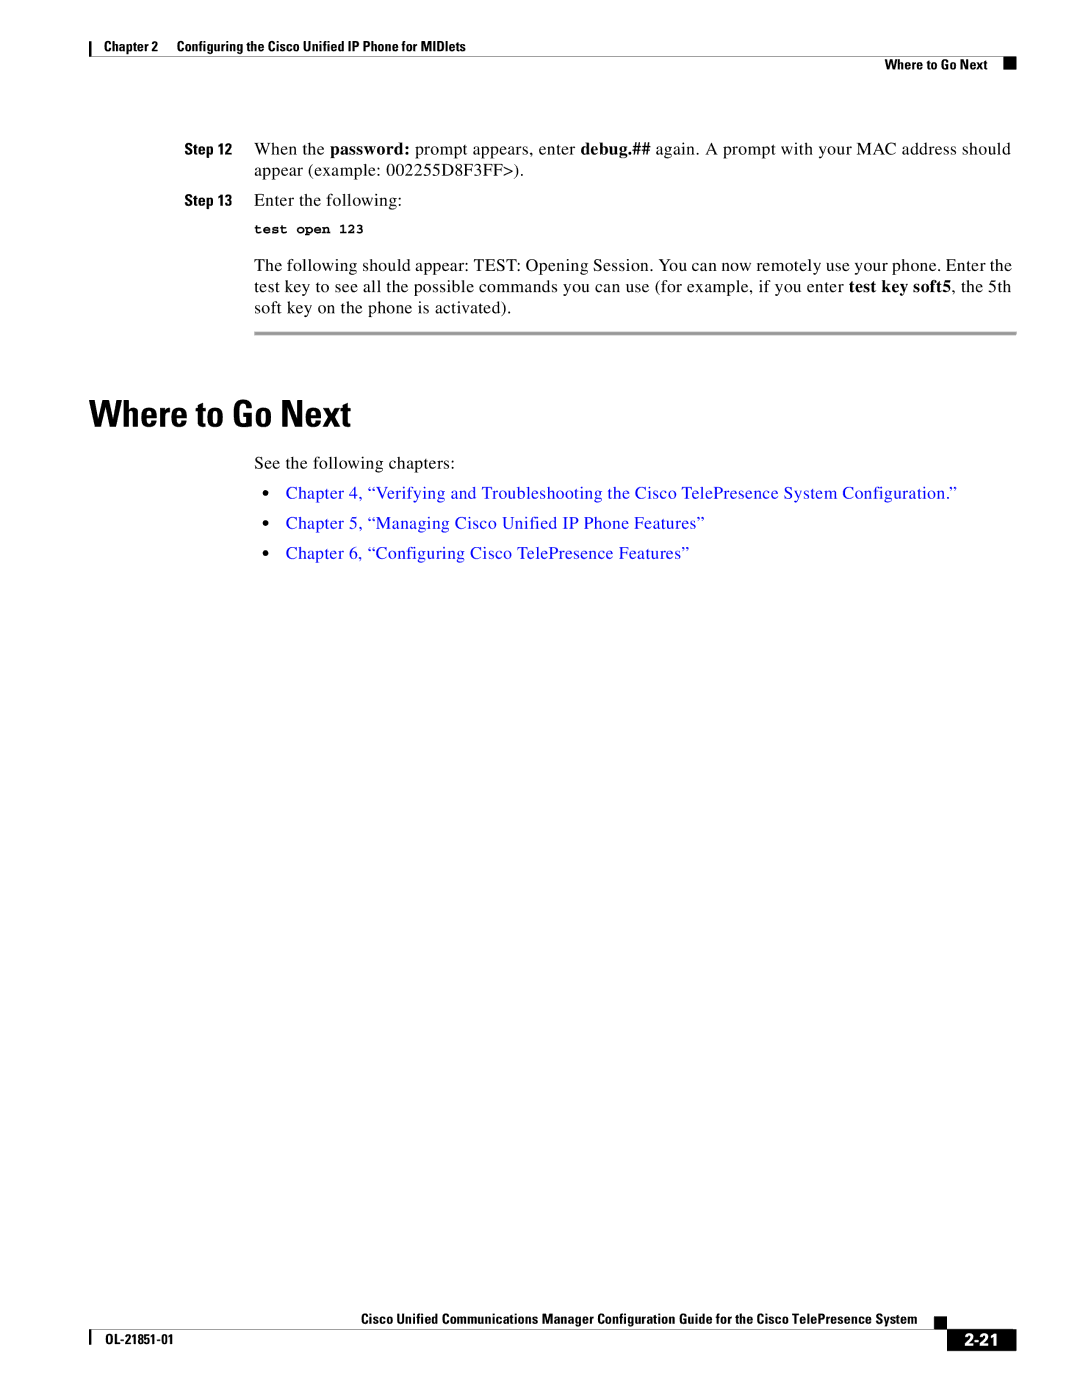 Cisco Systems OL-21851-01 manual Where to Go Next 